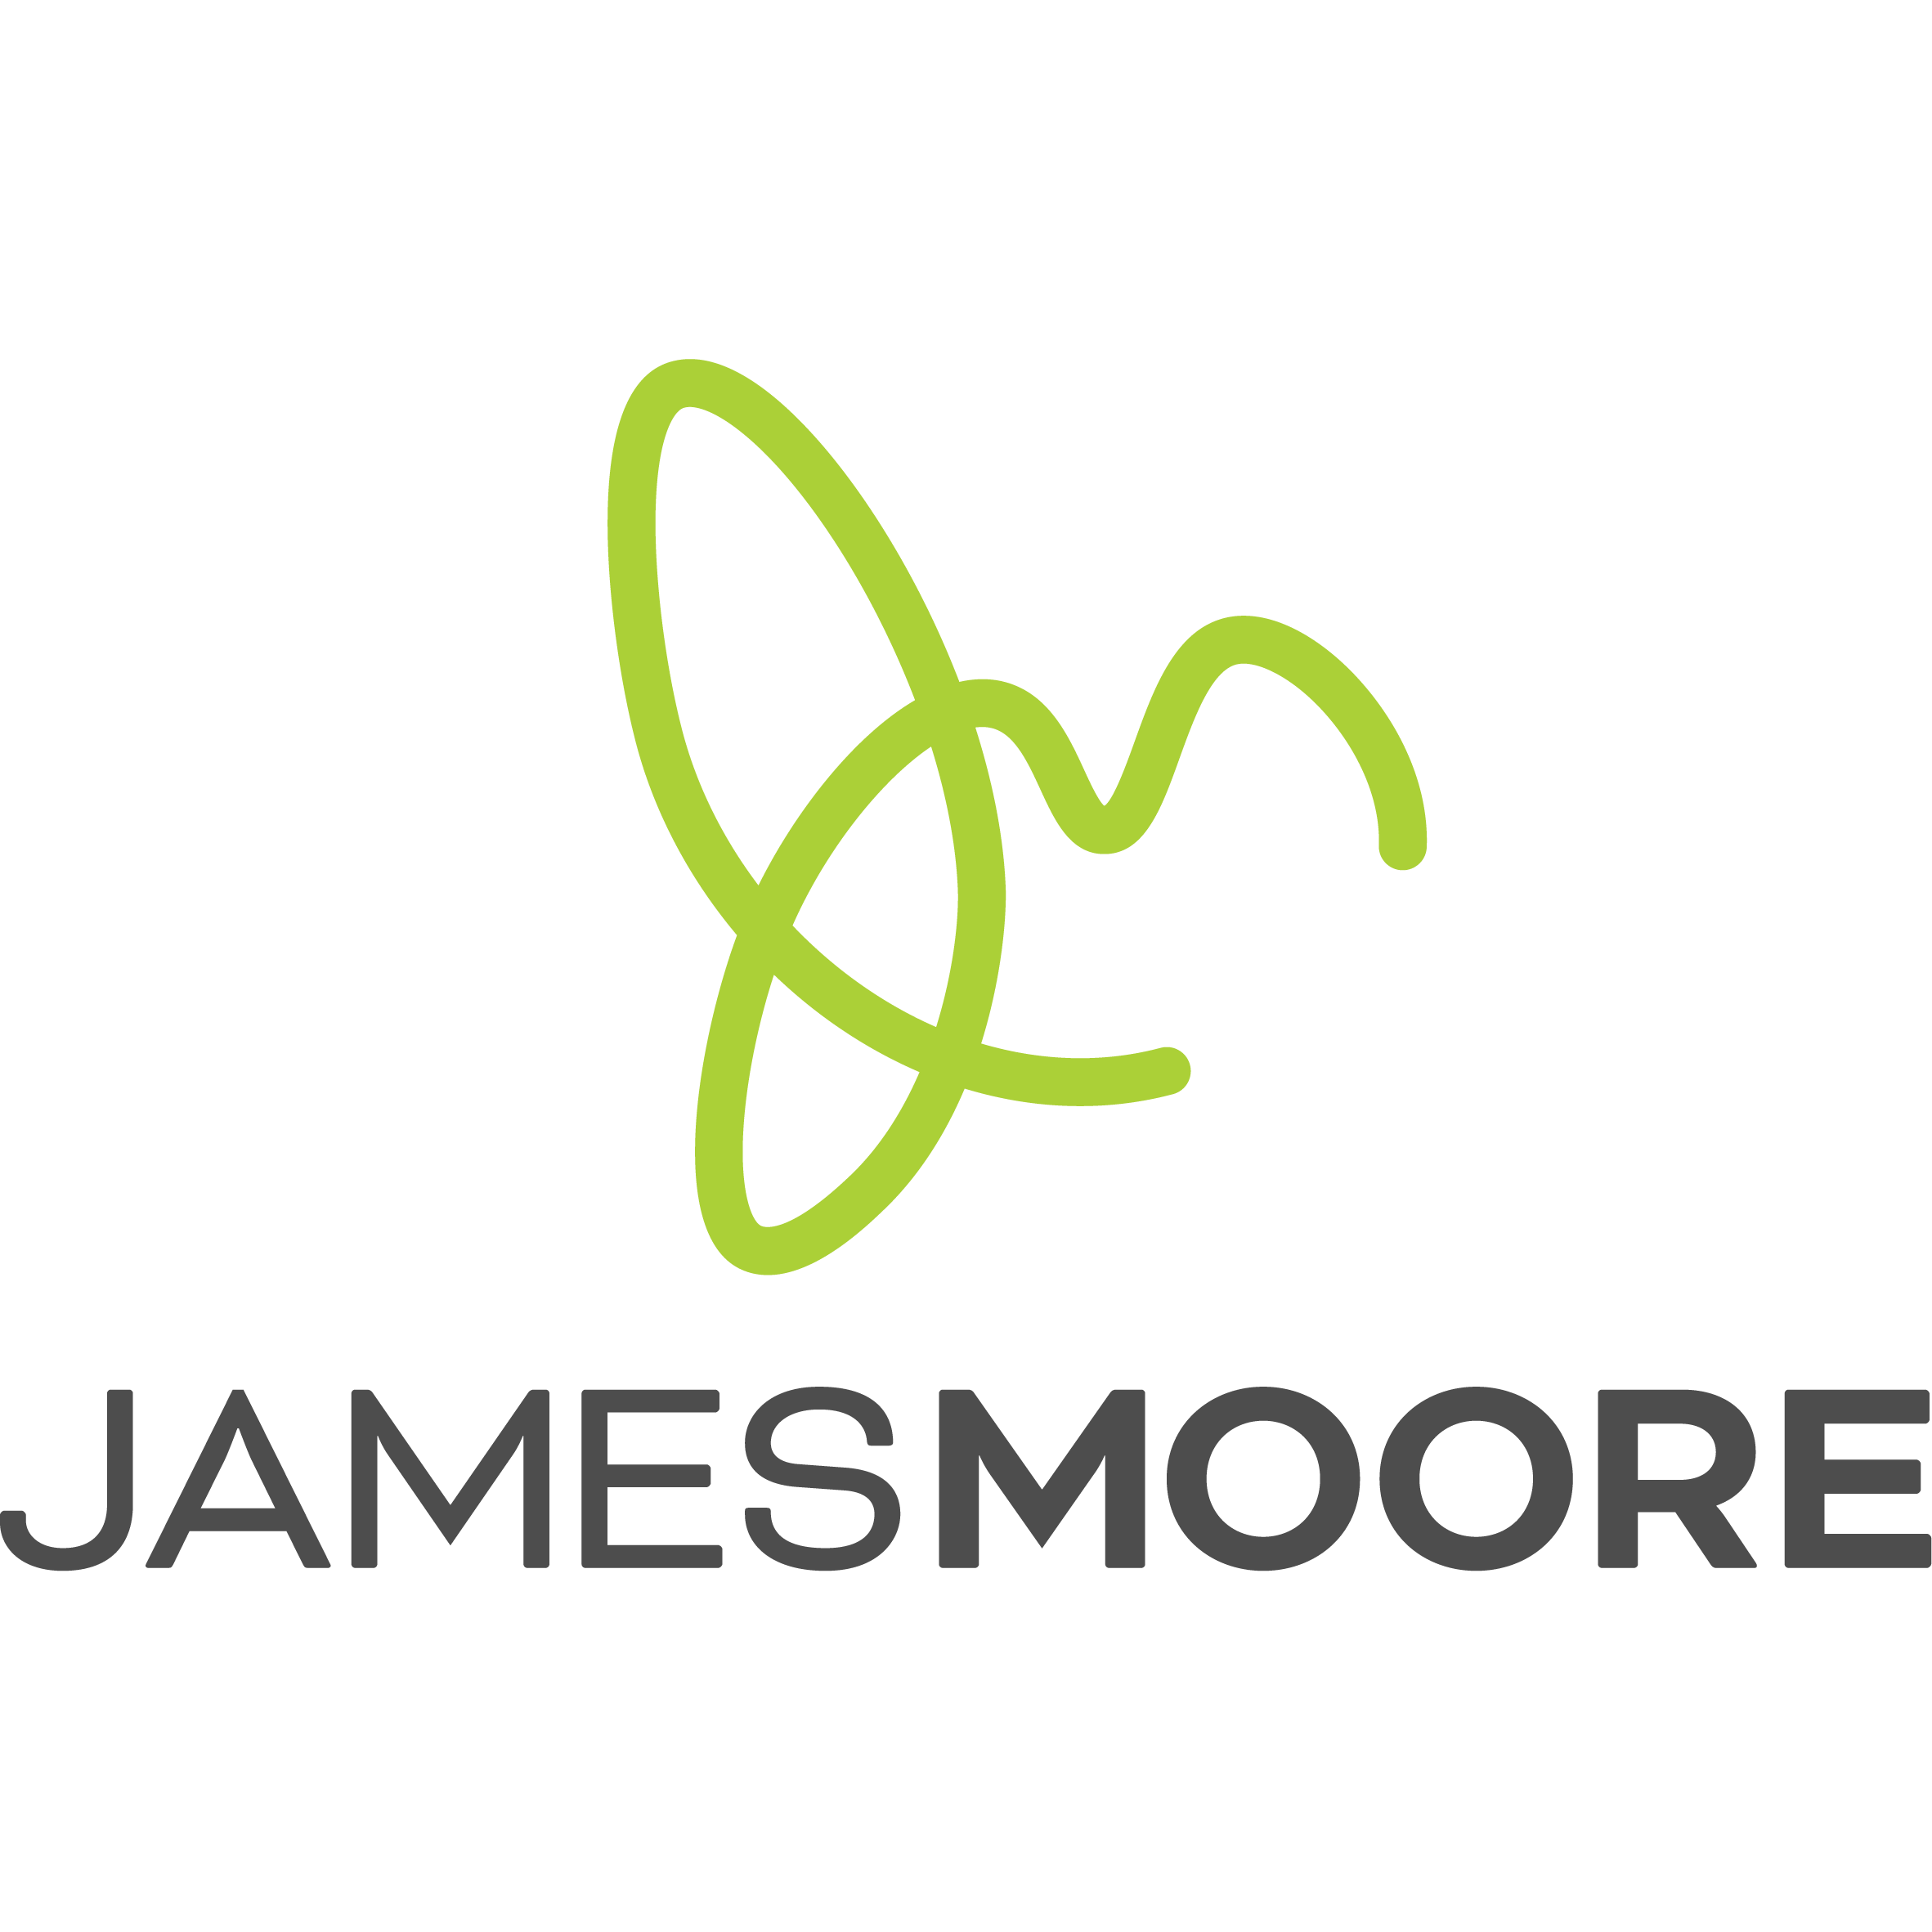 James Moore & Co. - Gainesville, FL 32607 - (352)378-1331 | ShowMeLocal.com